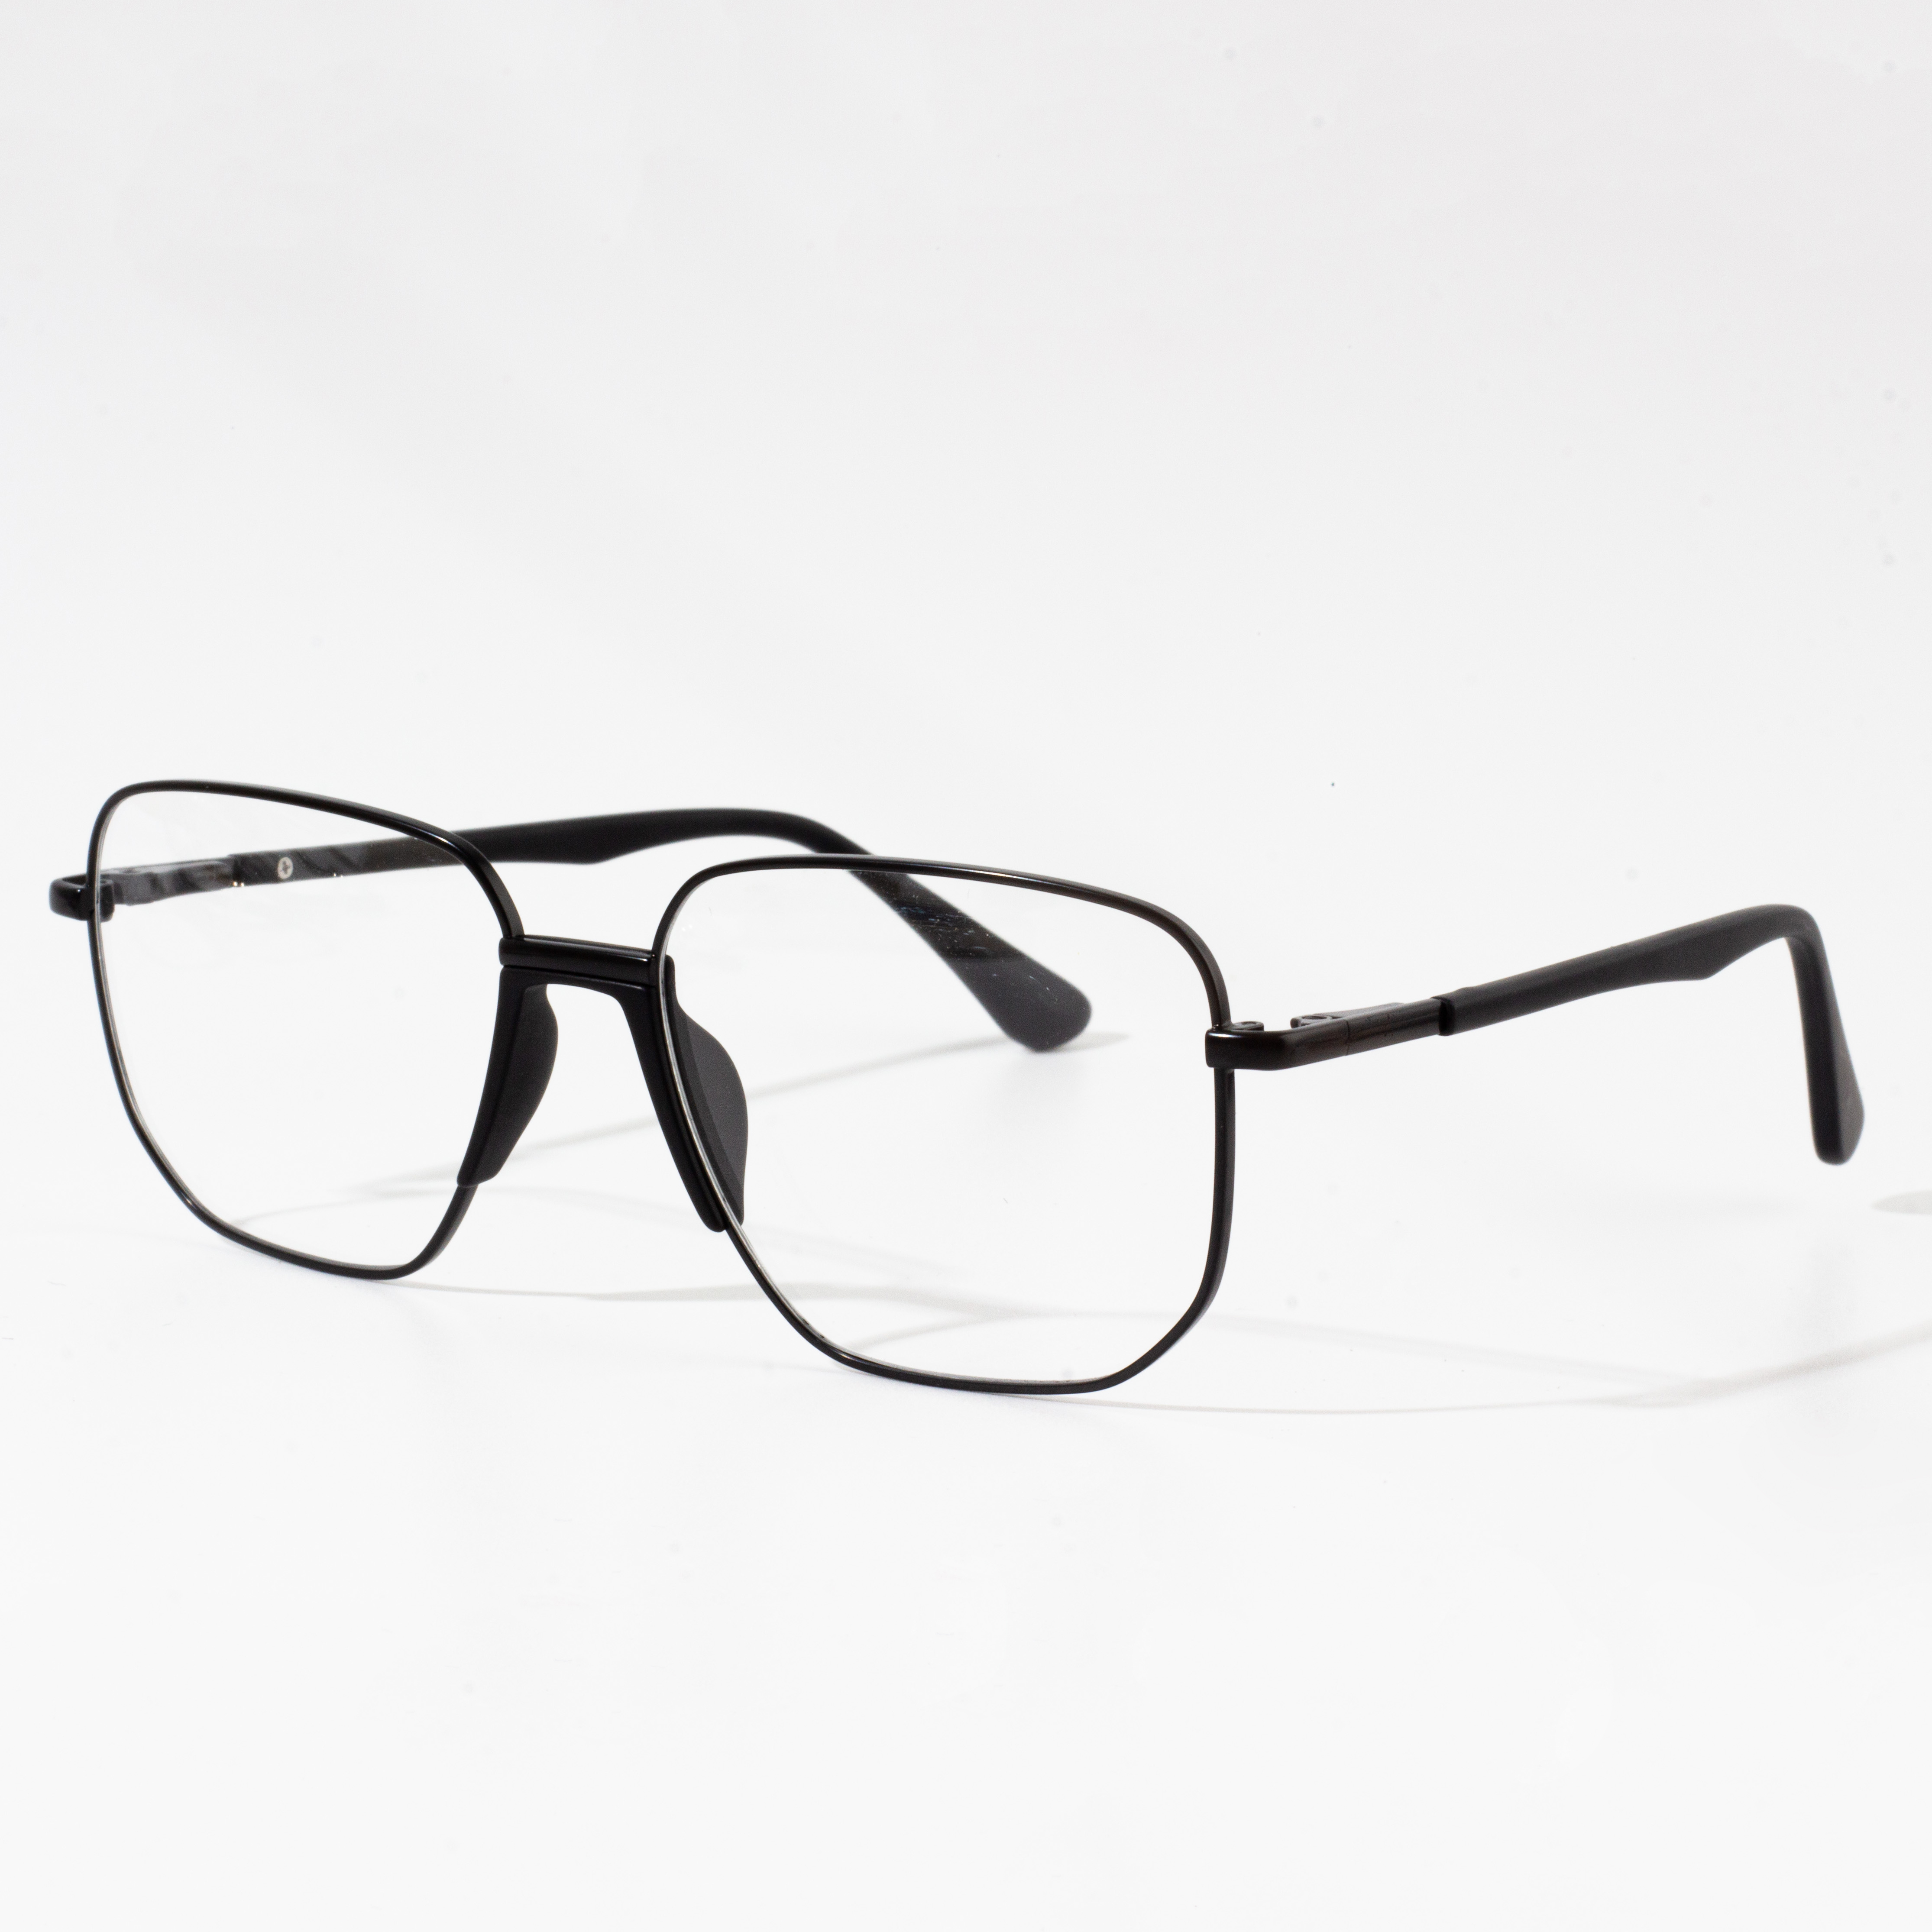 Titanium Glasses Frame (5)